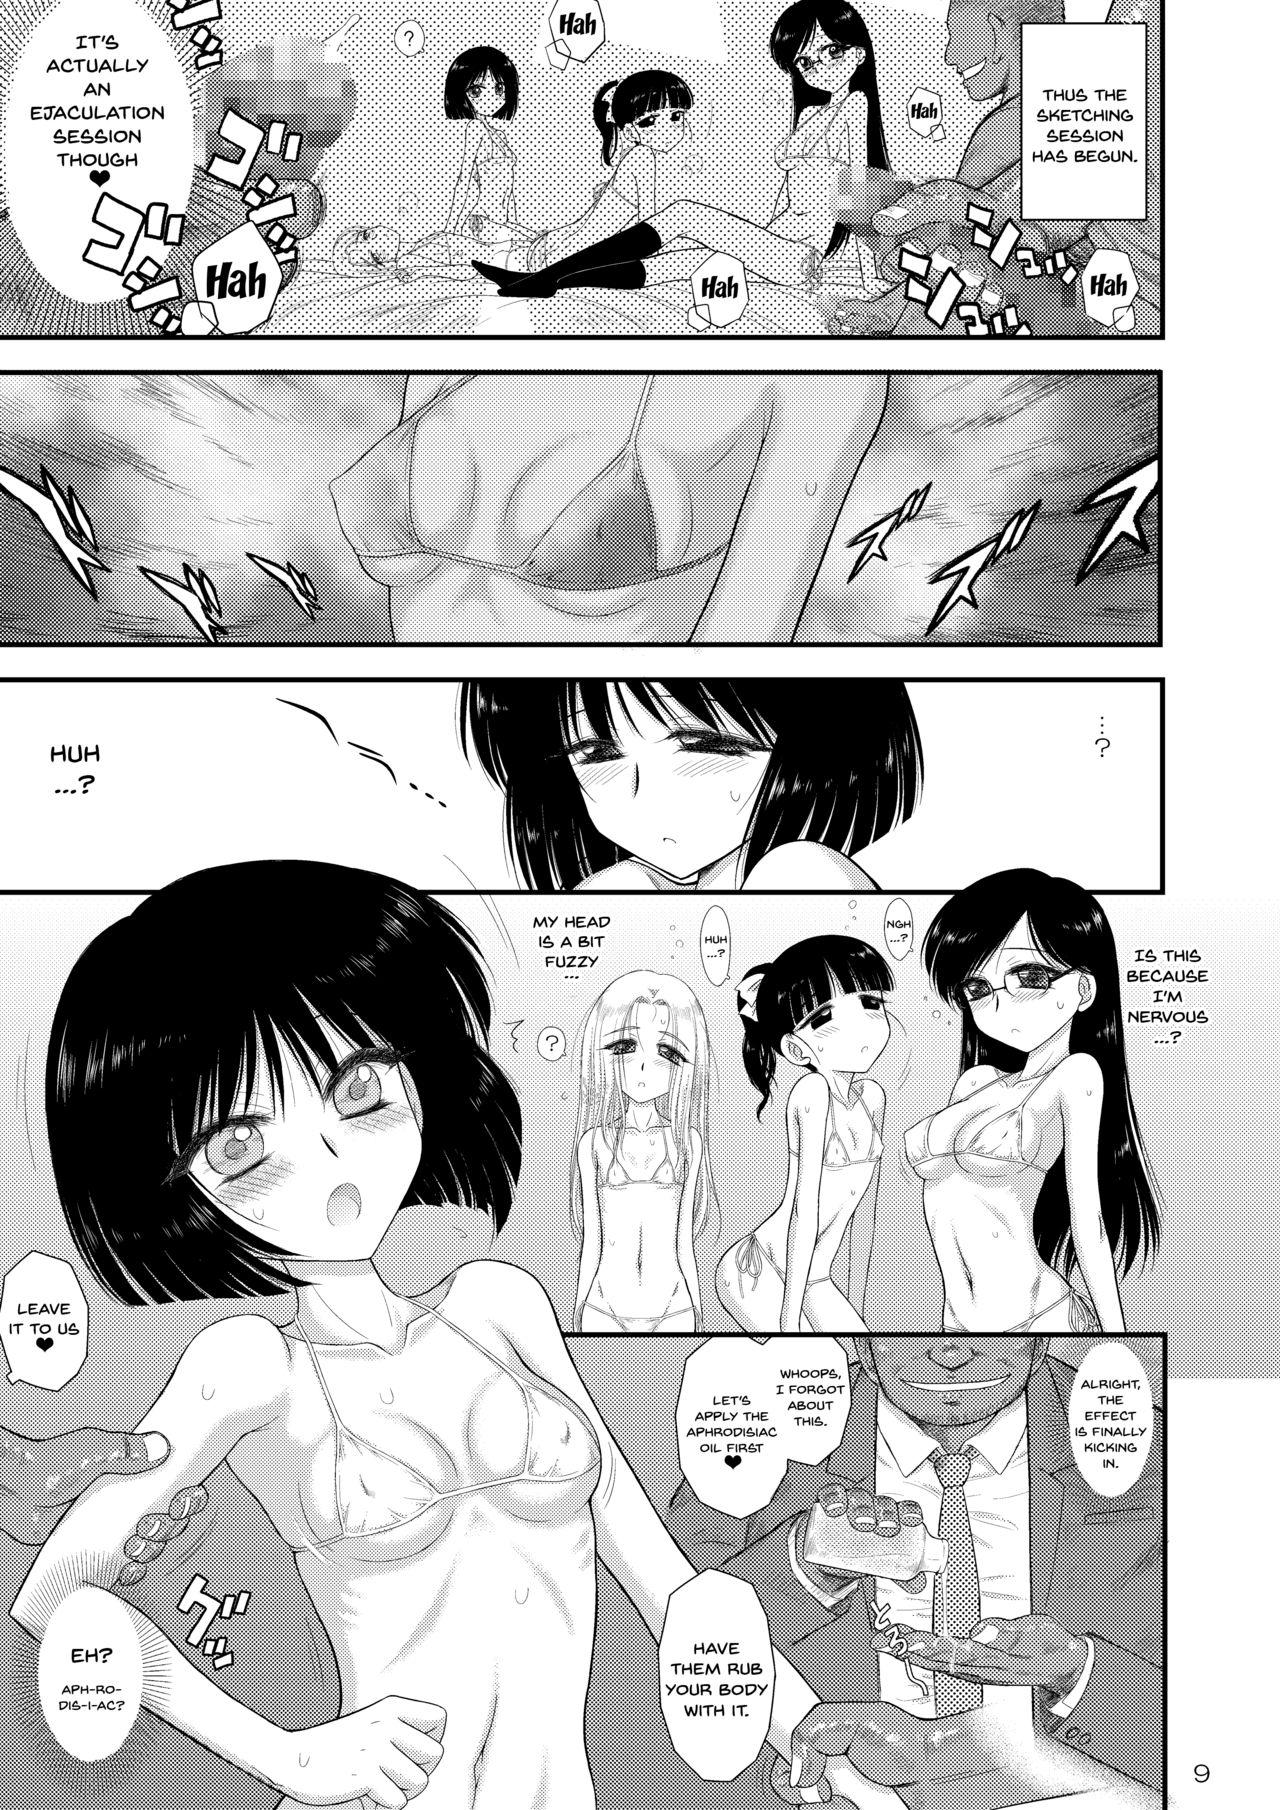 Freaky Doyoubi no Joshi wa Gaman Dekinai - Sailor moon Hunks - Page 8